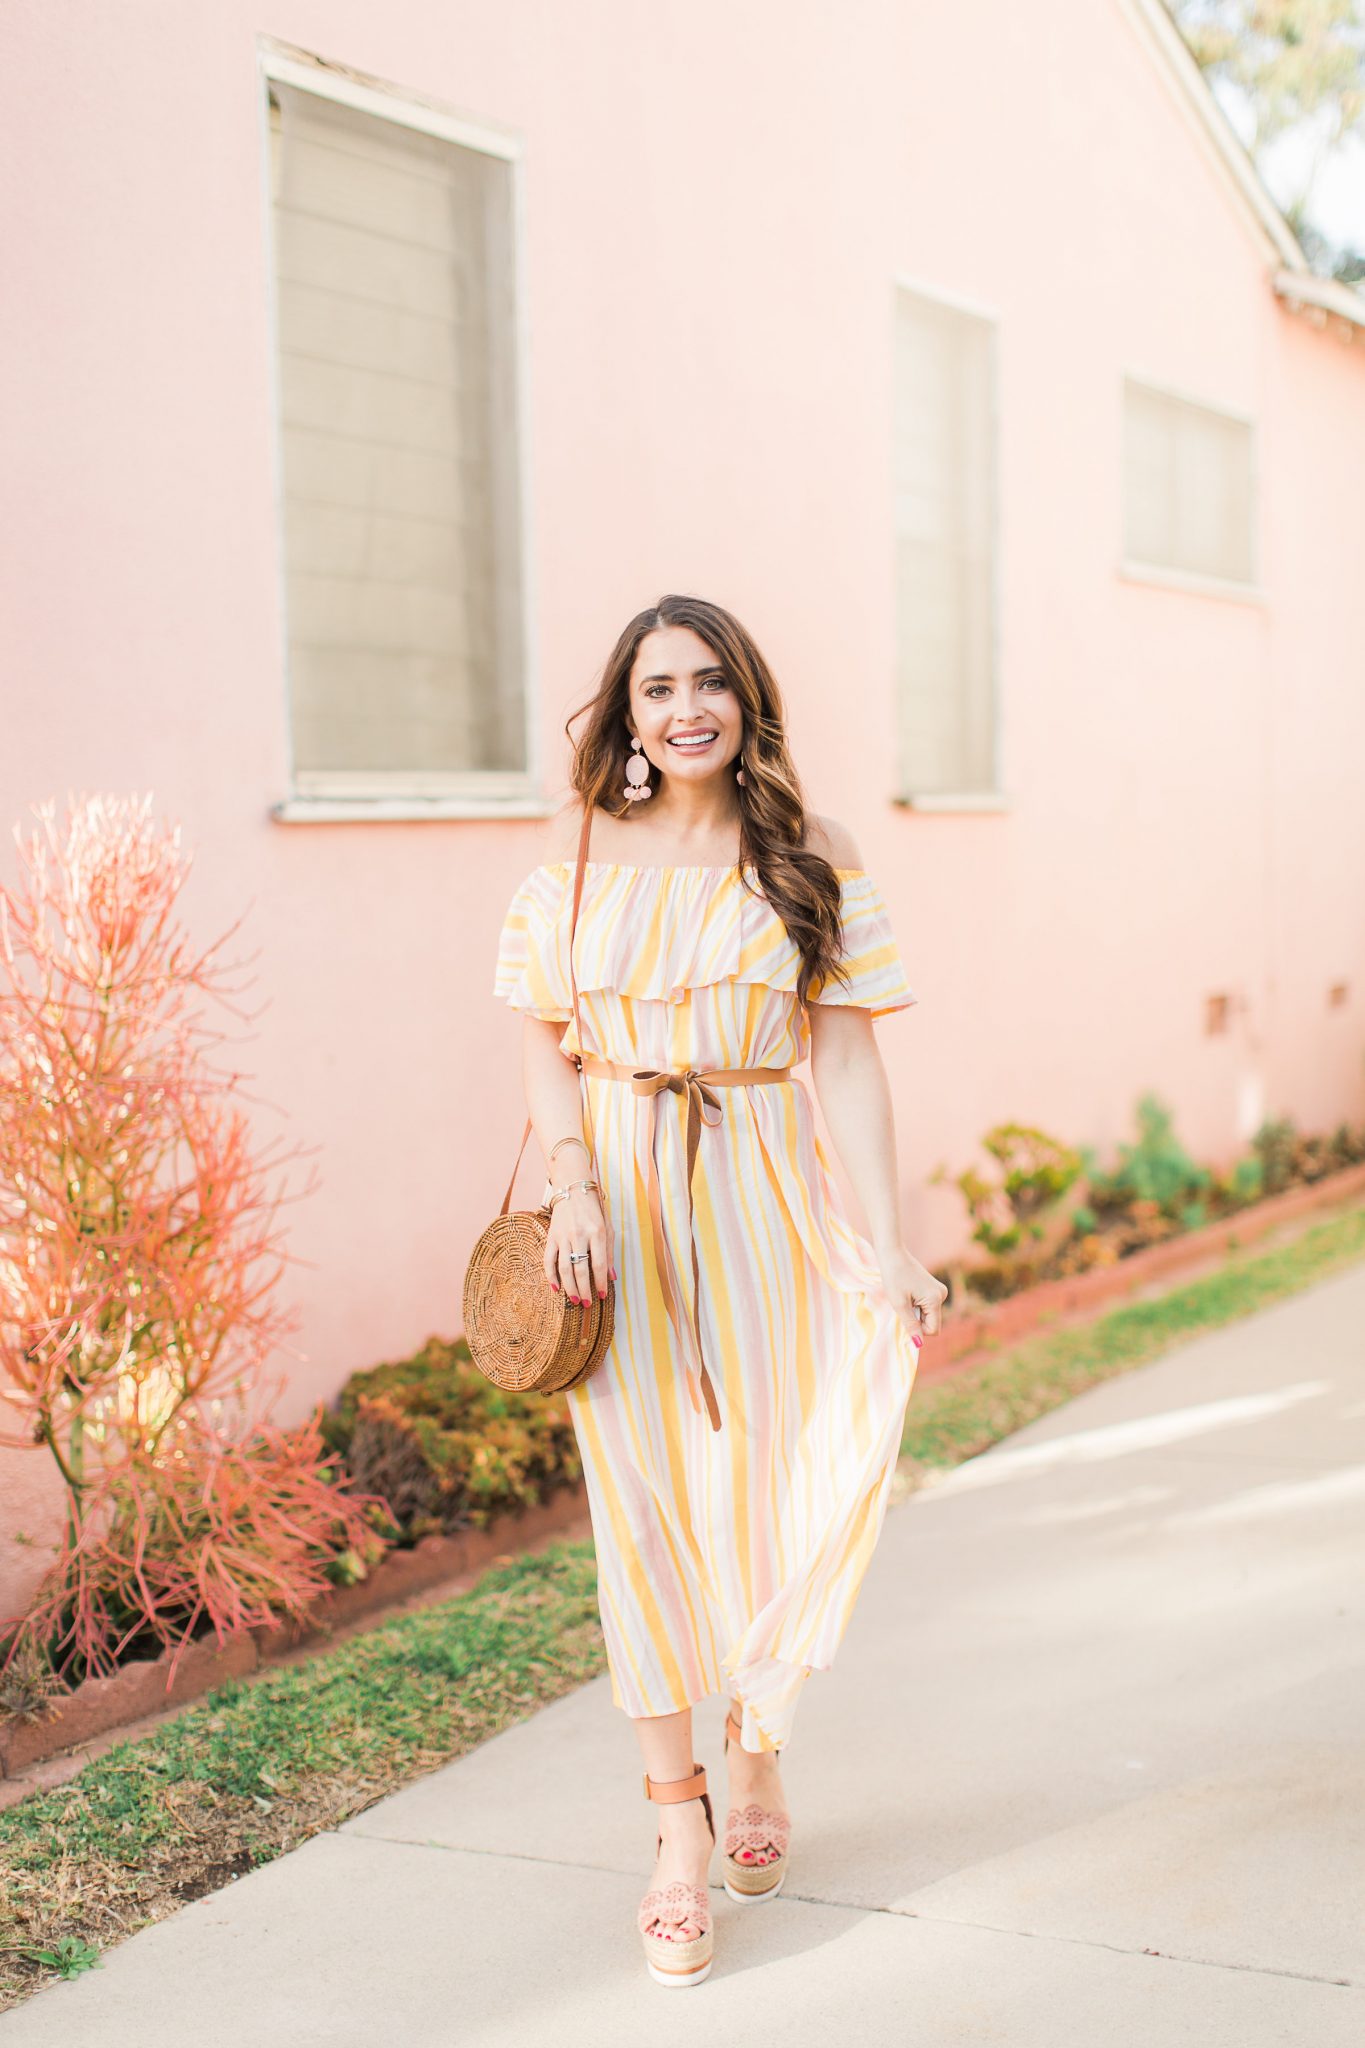 Shopbop Sale Spring Favorites by popular Orange County fashion blogger Maxie Elle